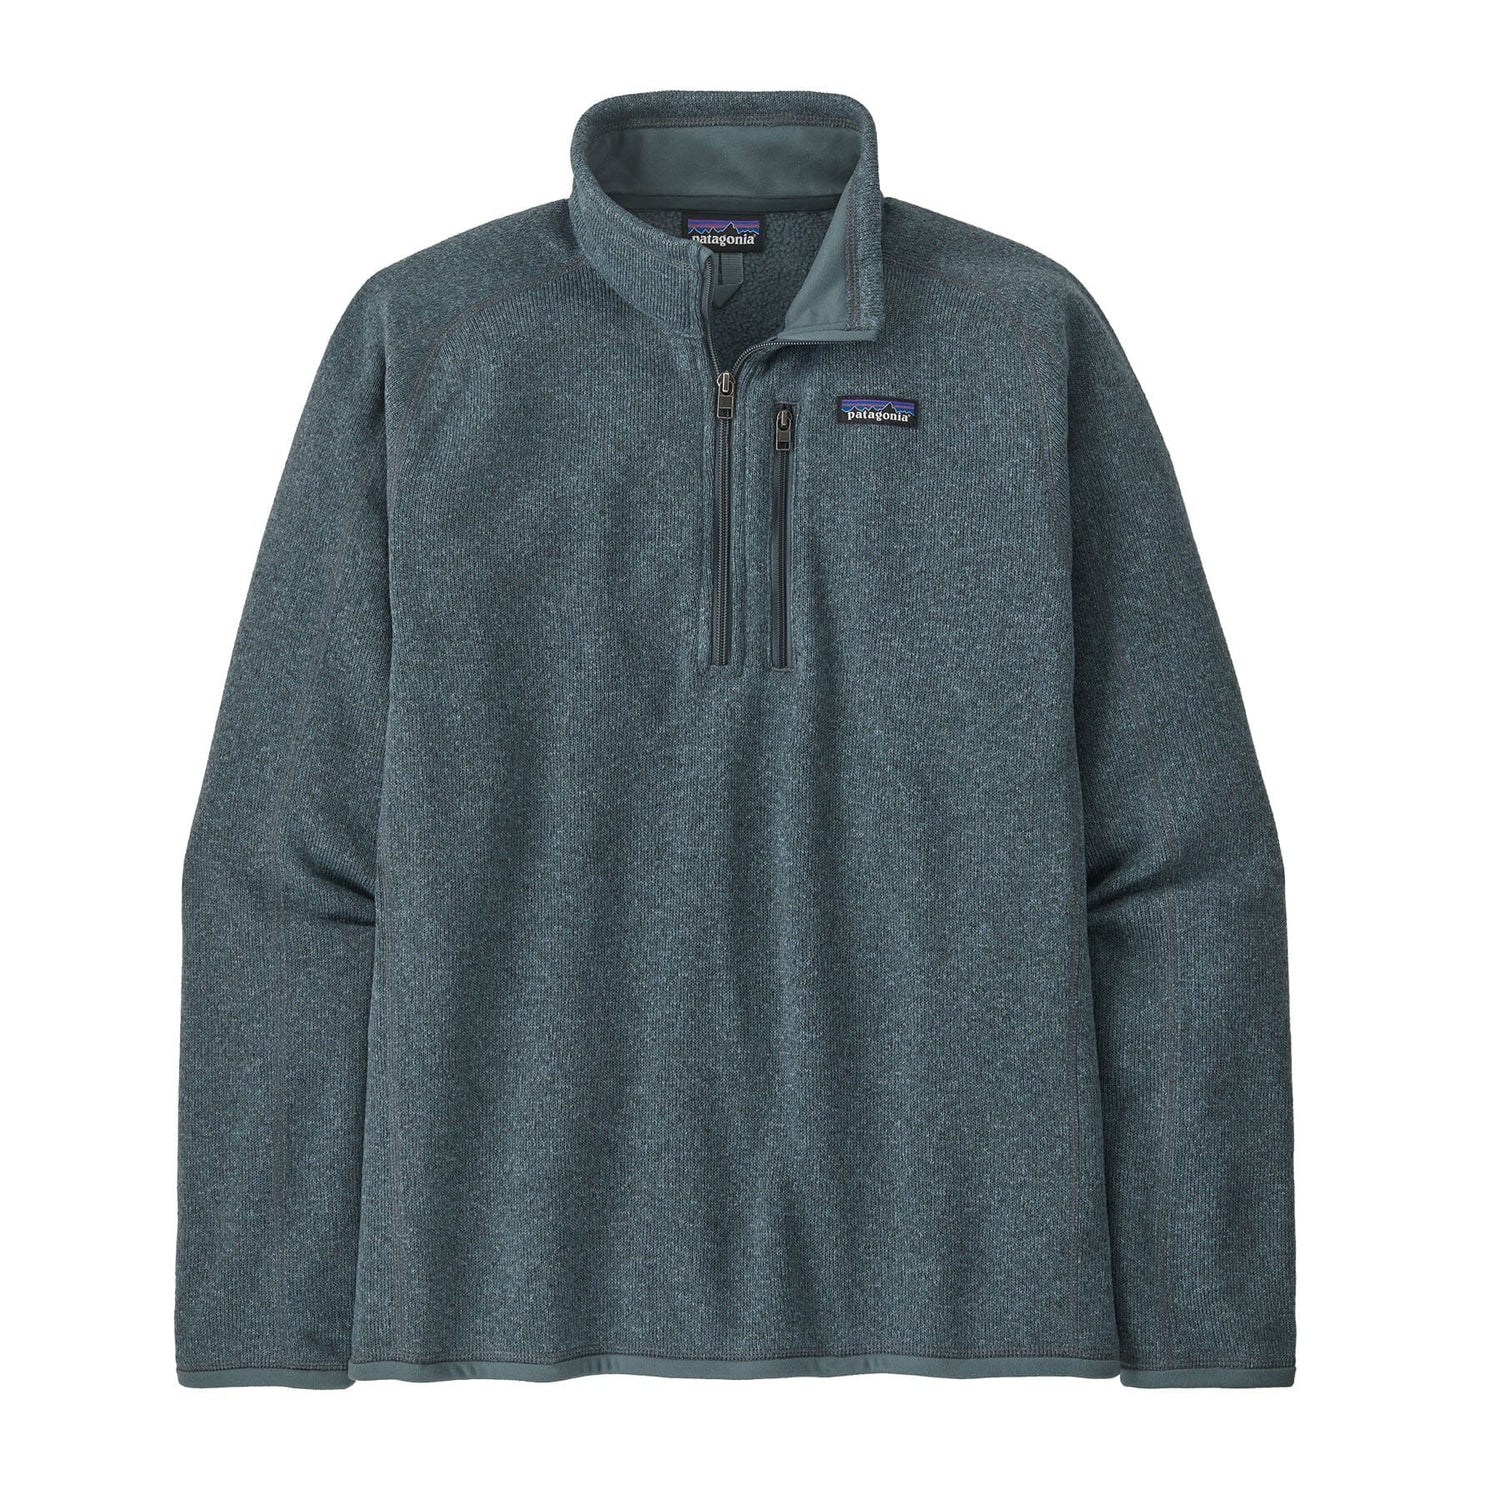 Patagonia - M's Better Sweater 1/4 Zip Fleece - 100% Recycled Polyester - Weekendbee - sustainable sportswear